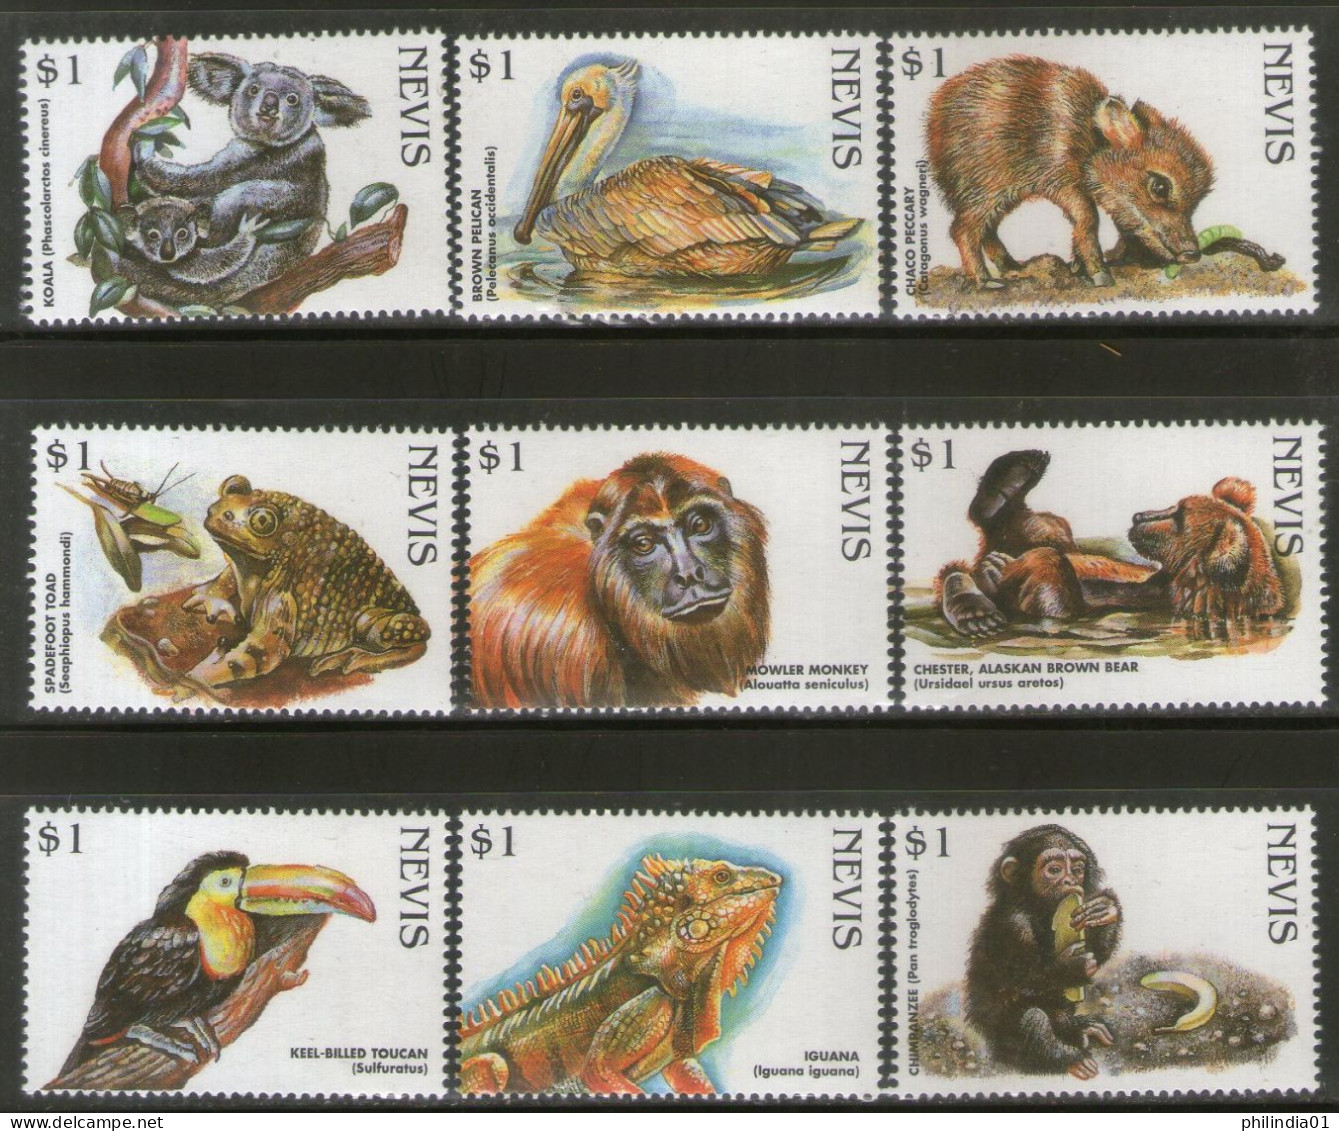 Nevis 1998 Endangered Species Birds Monkey Bear Wildlife Animals Sc 1073 9v MNH # 196 - Monkeys